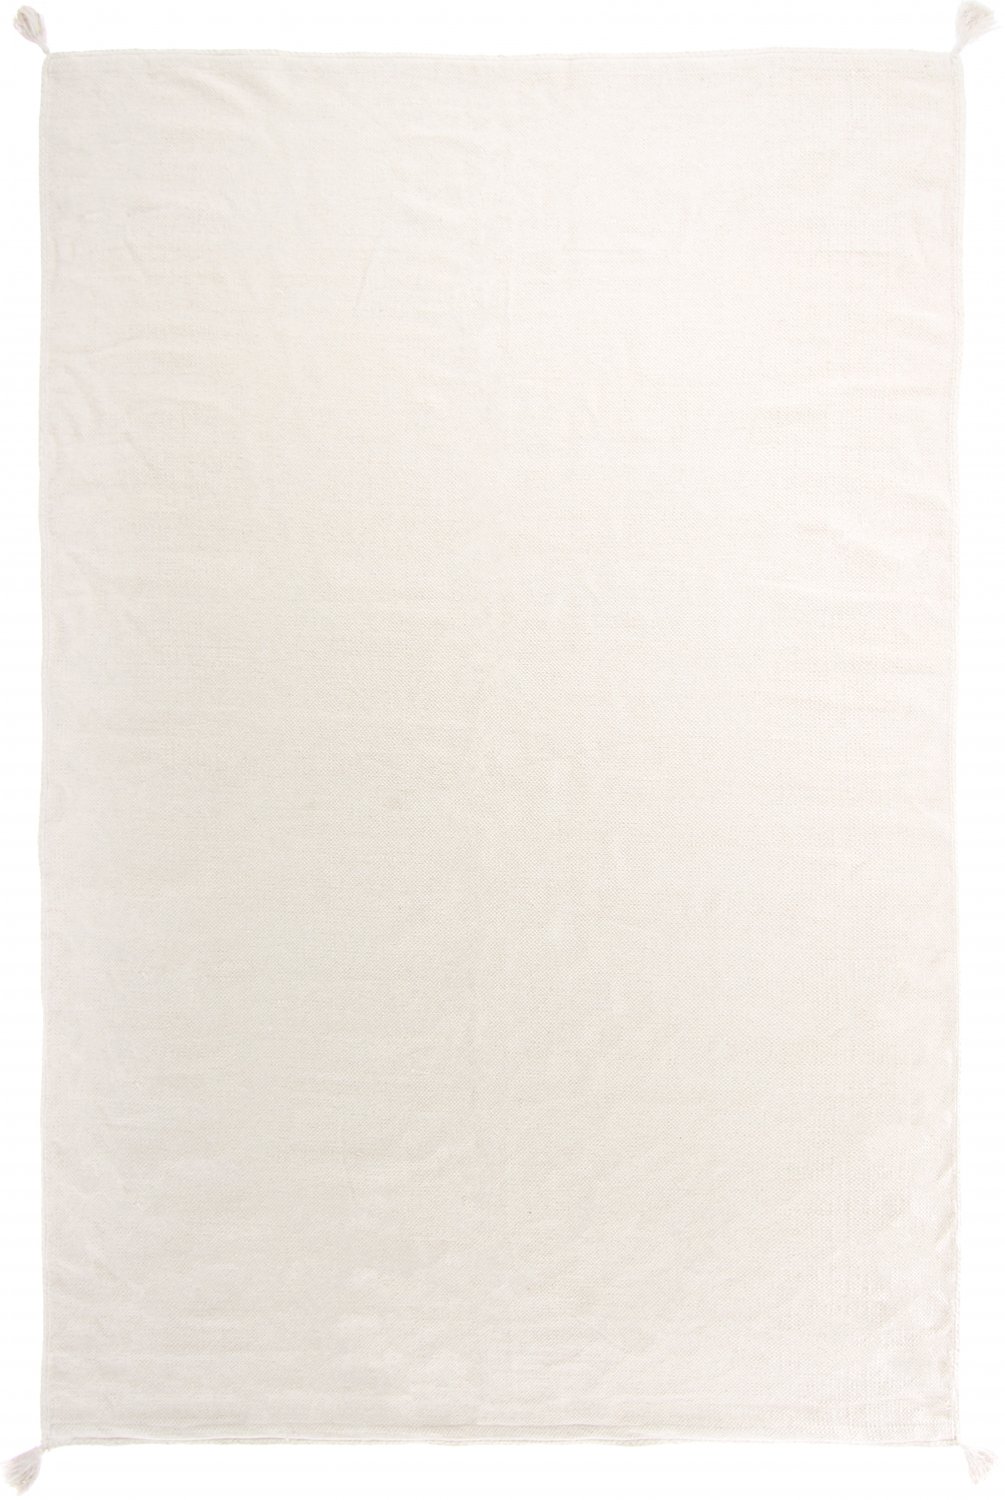 Cotton rug - Monte (white)